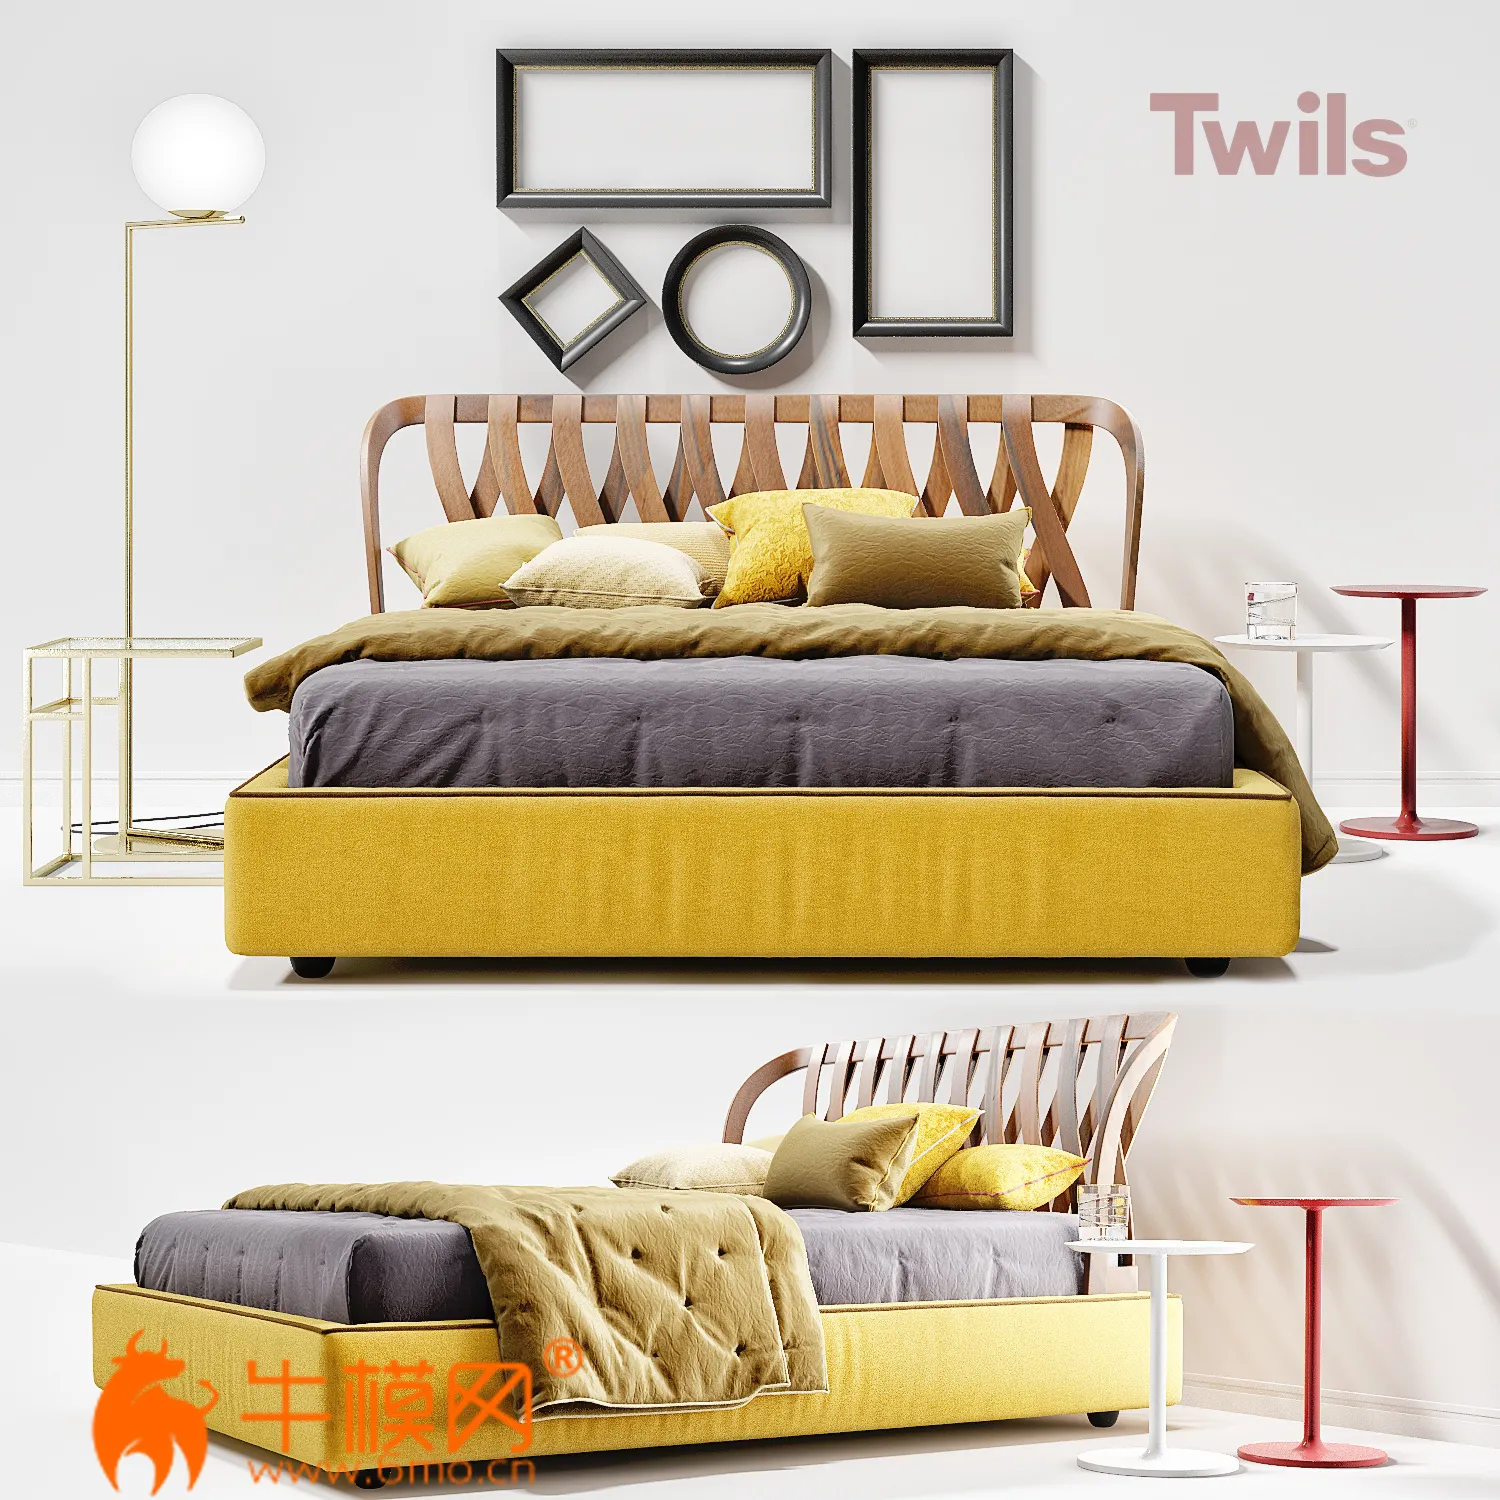 Bed Natural Twils – 3653